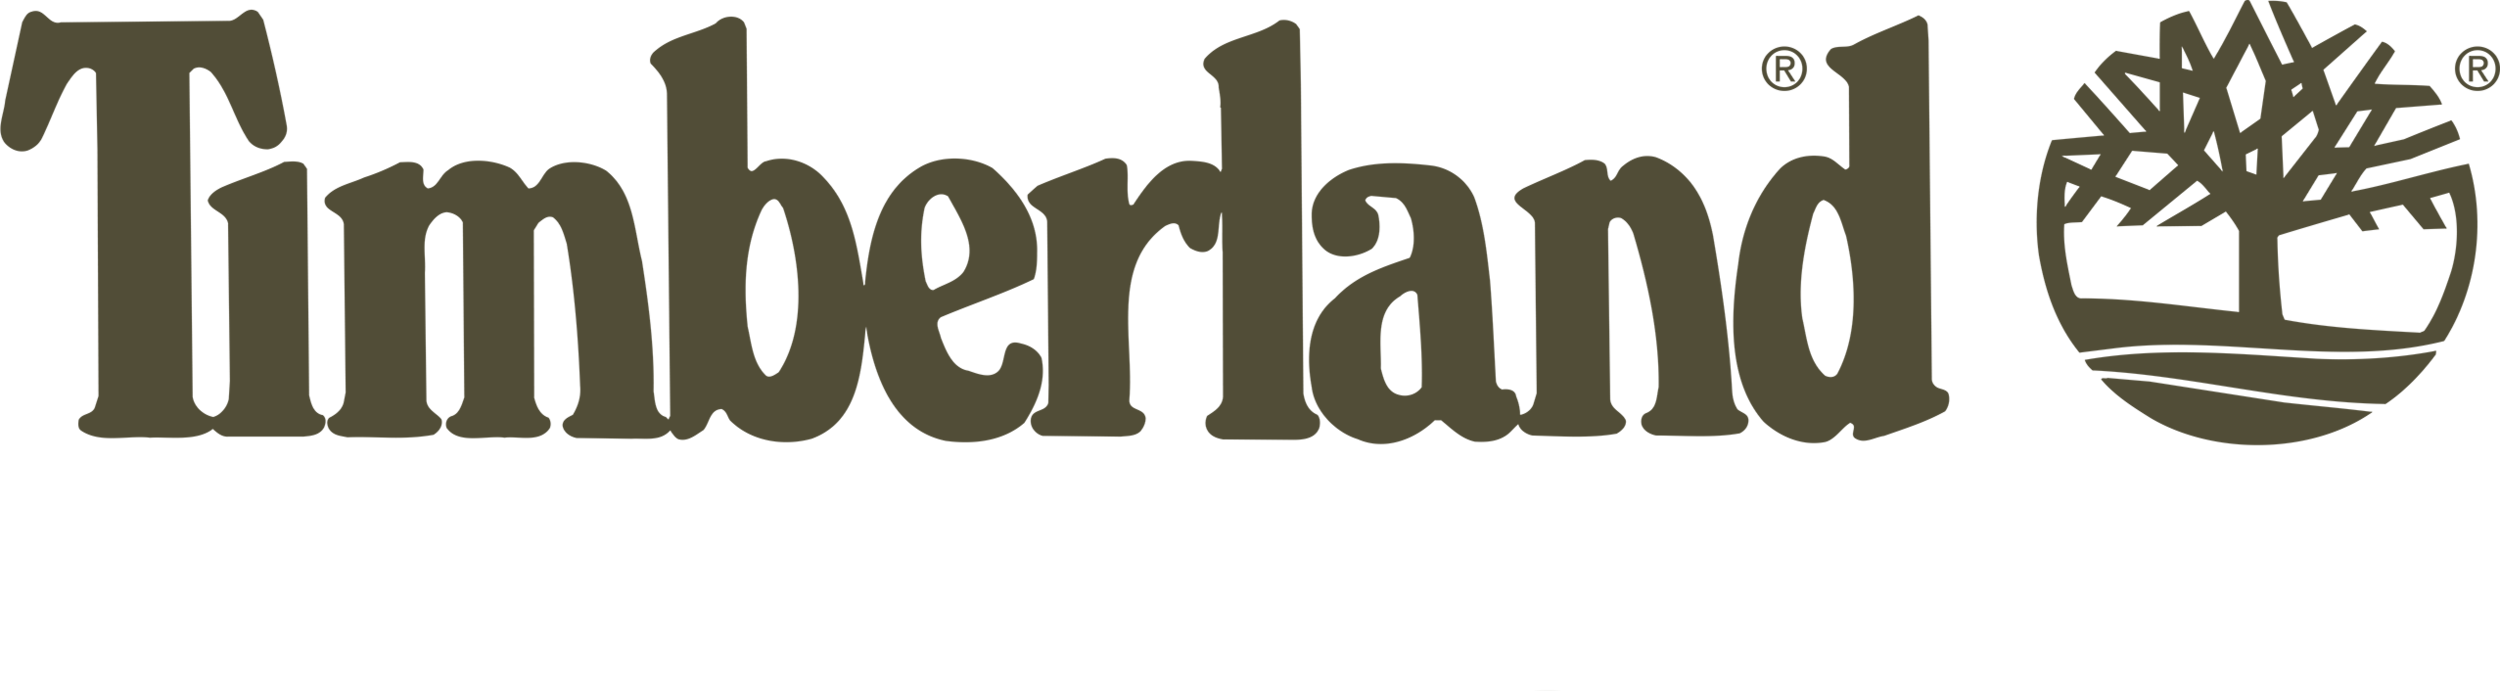 timberland_logo.jpg